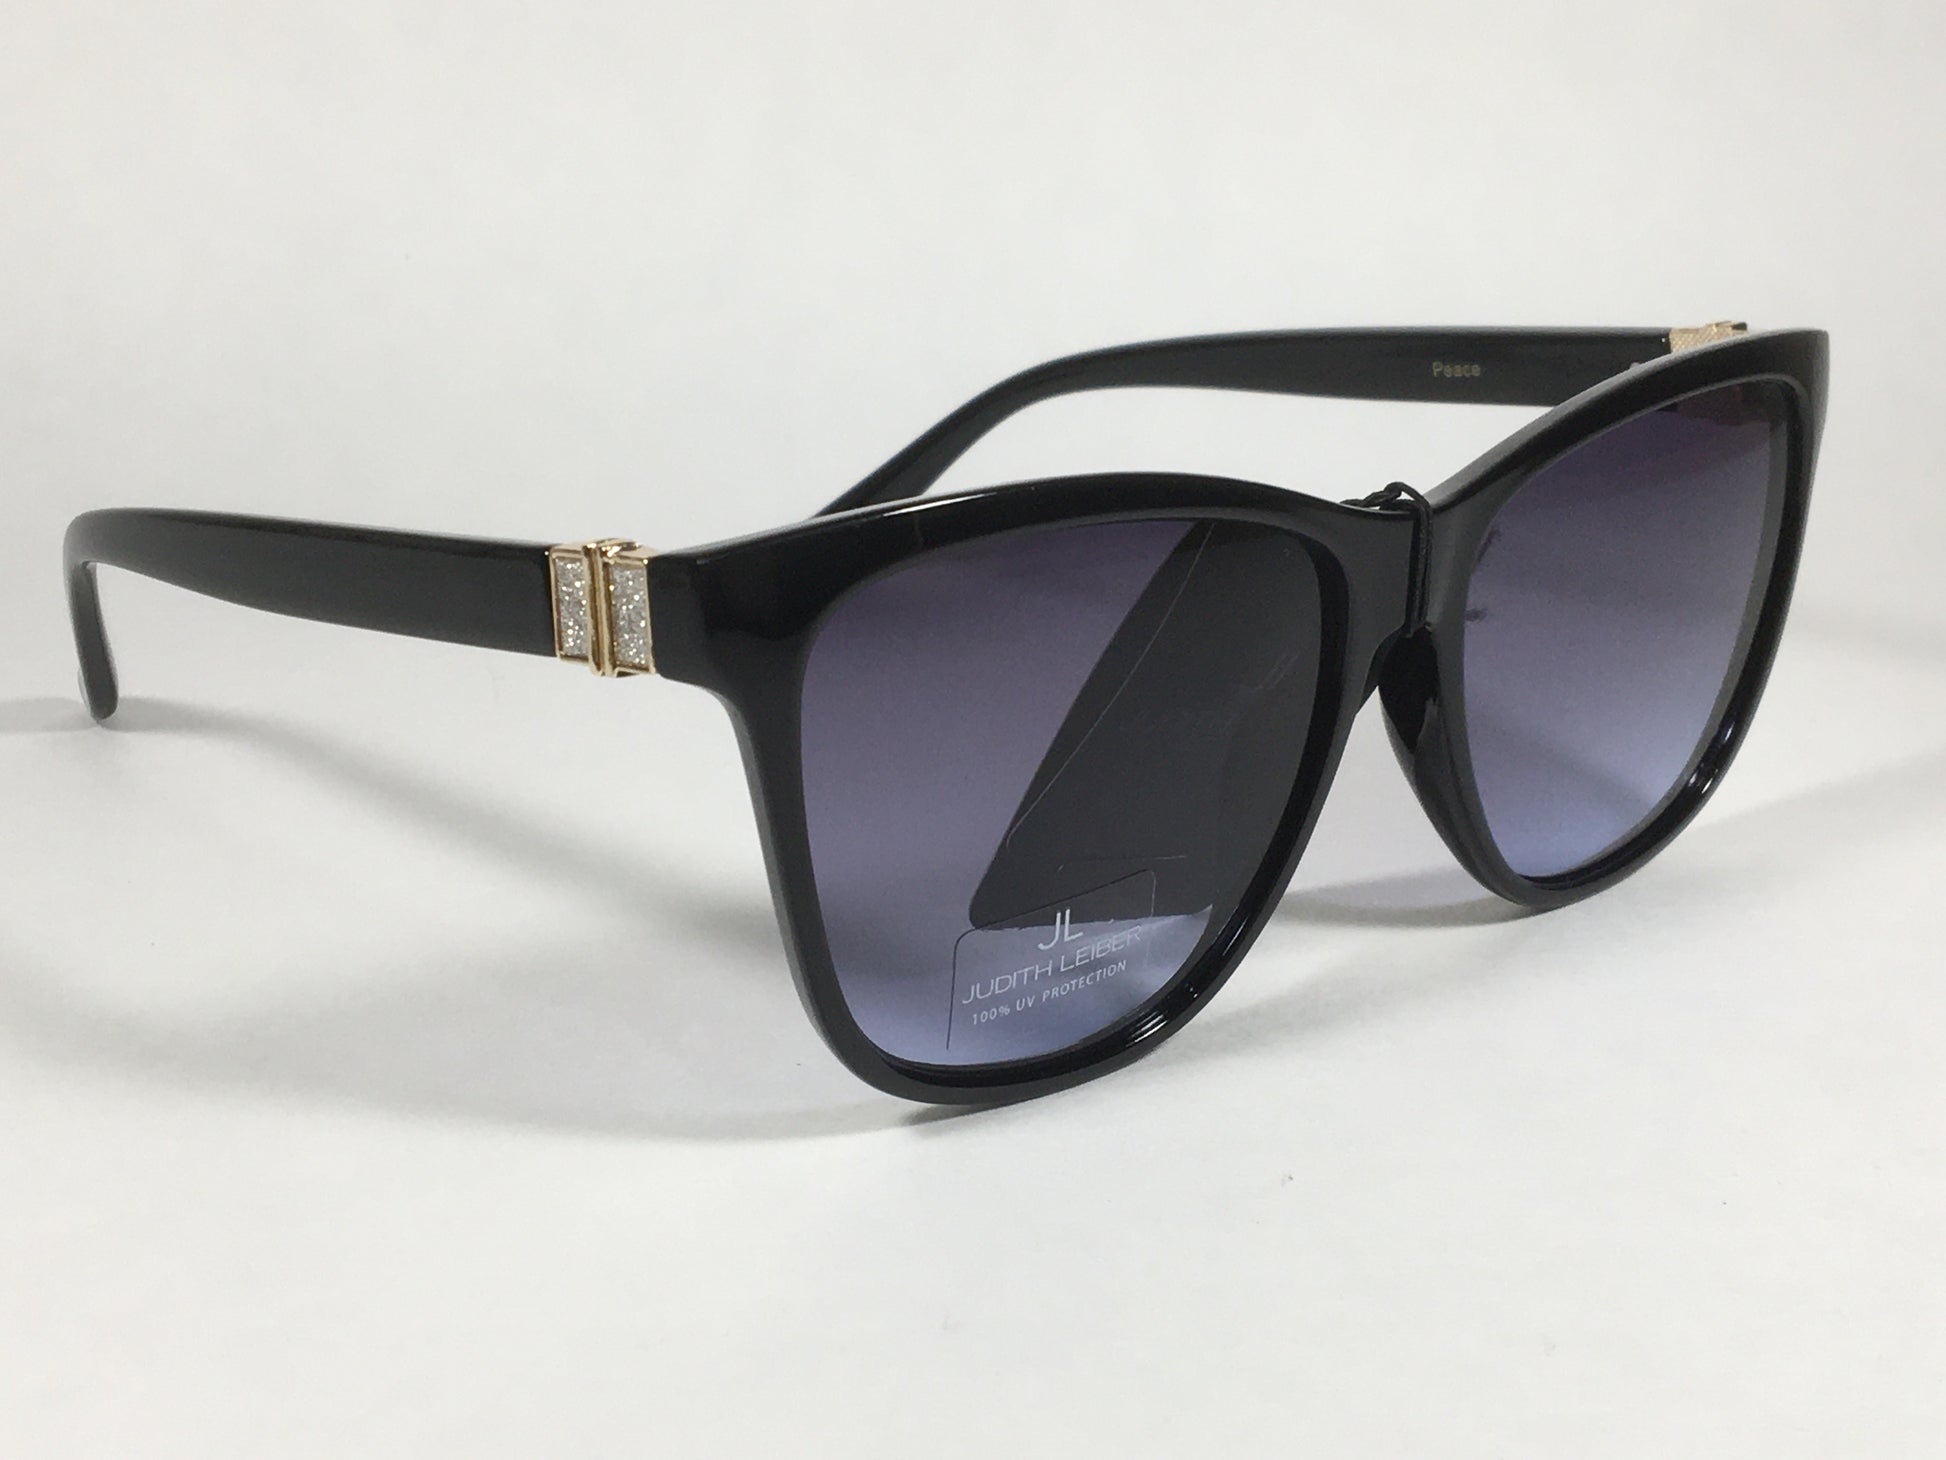 JL By Judith Leiber Peace Square Sunglasses Shiny Black Blue Gray Lens Gold Rhinestone Temples - Sunglasses